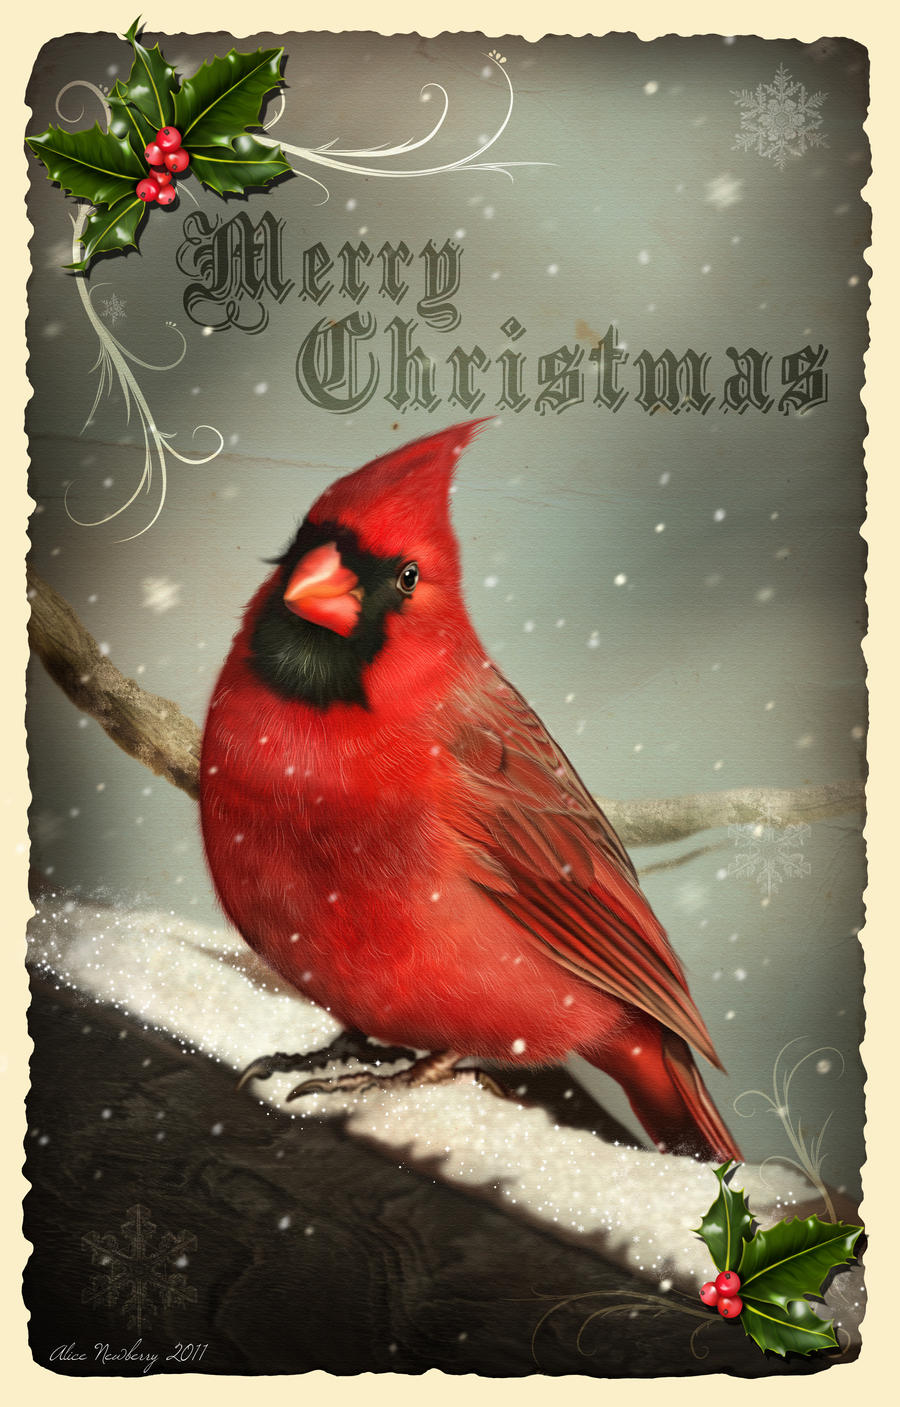 cardinal-christmas-card-design-by-doormouse1960-on-deviantart